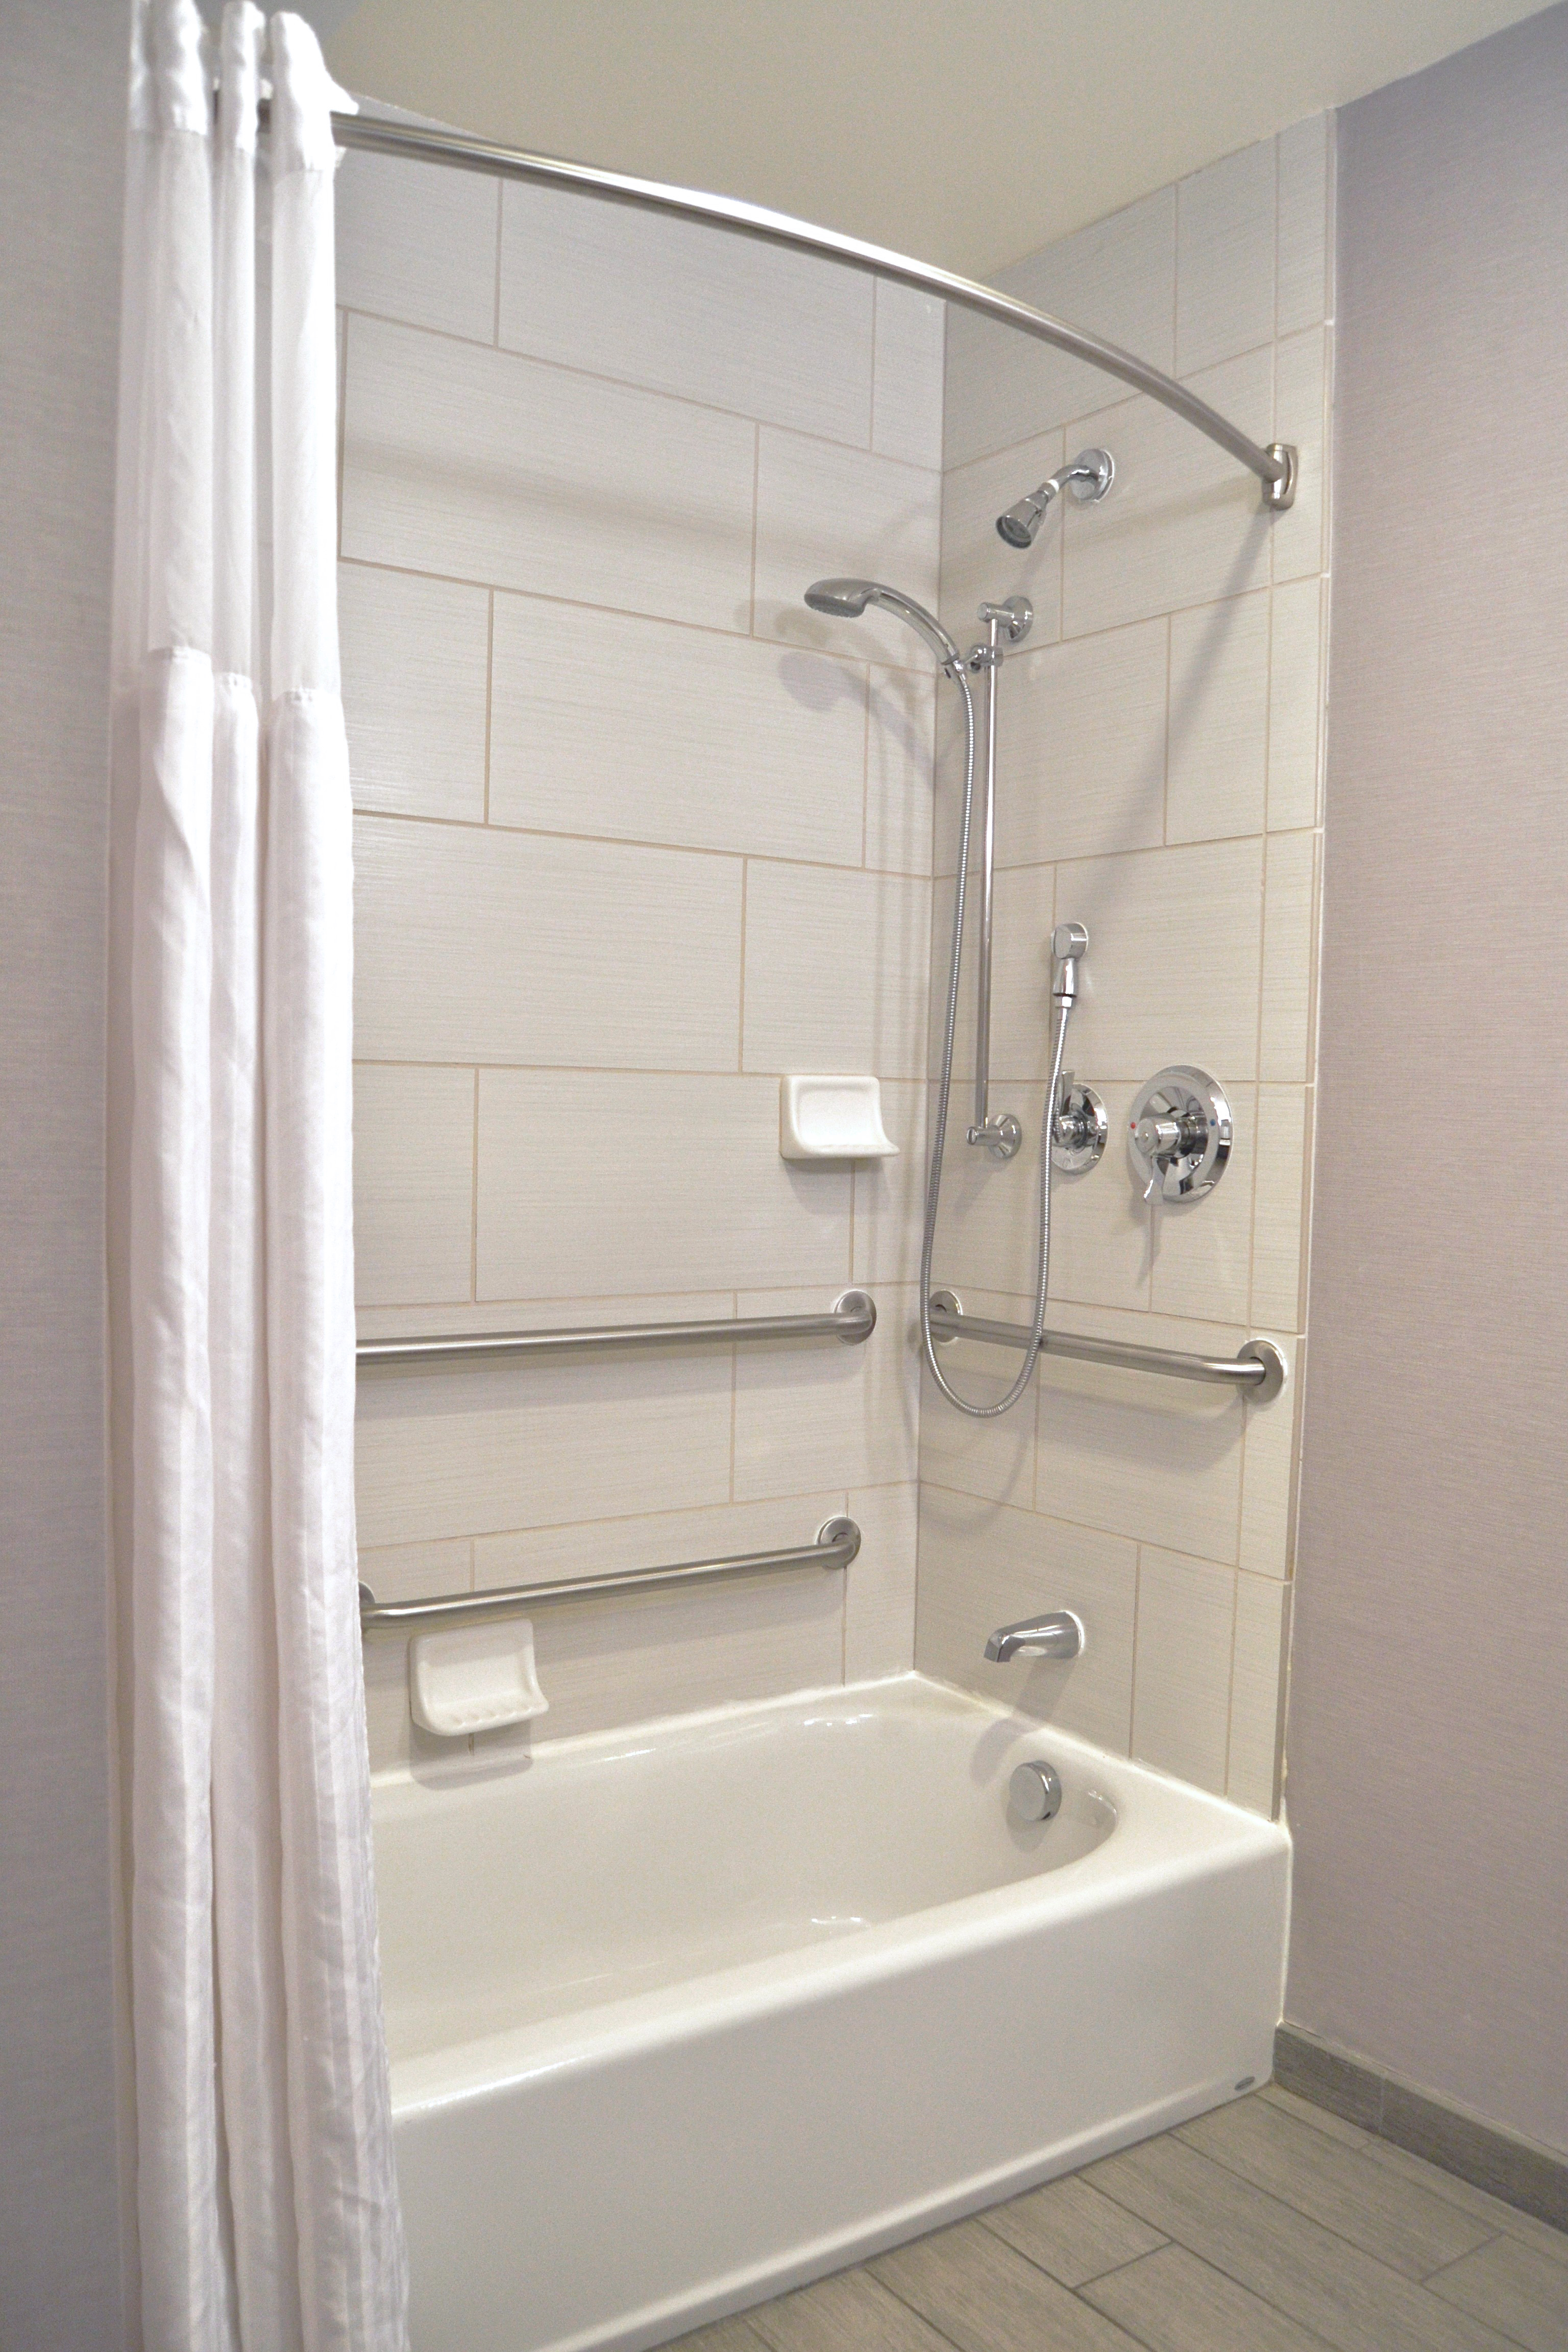 Accessible Bathroom Tub with Shower Head